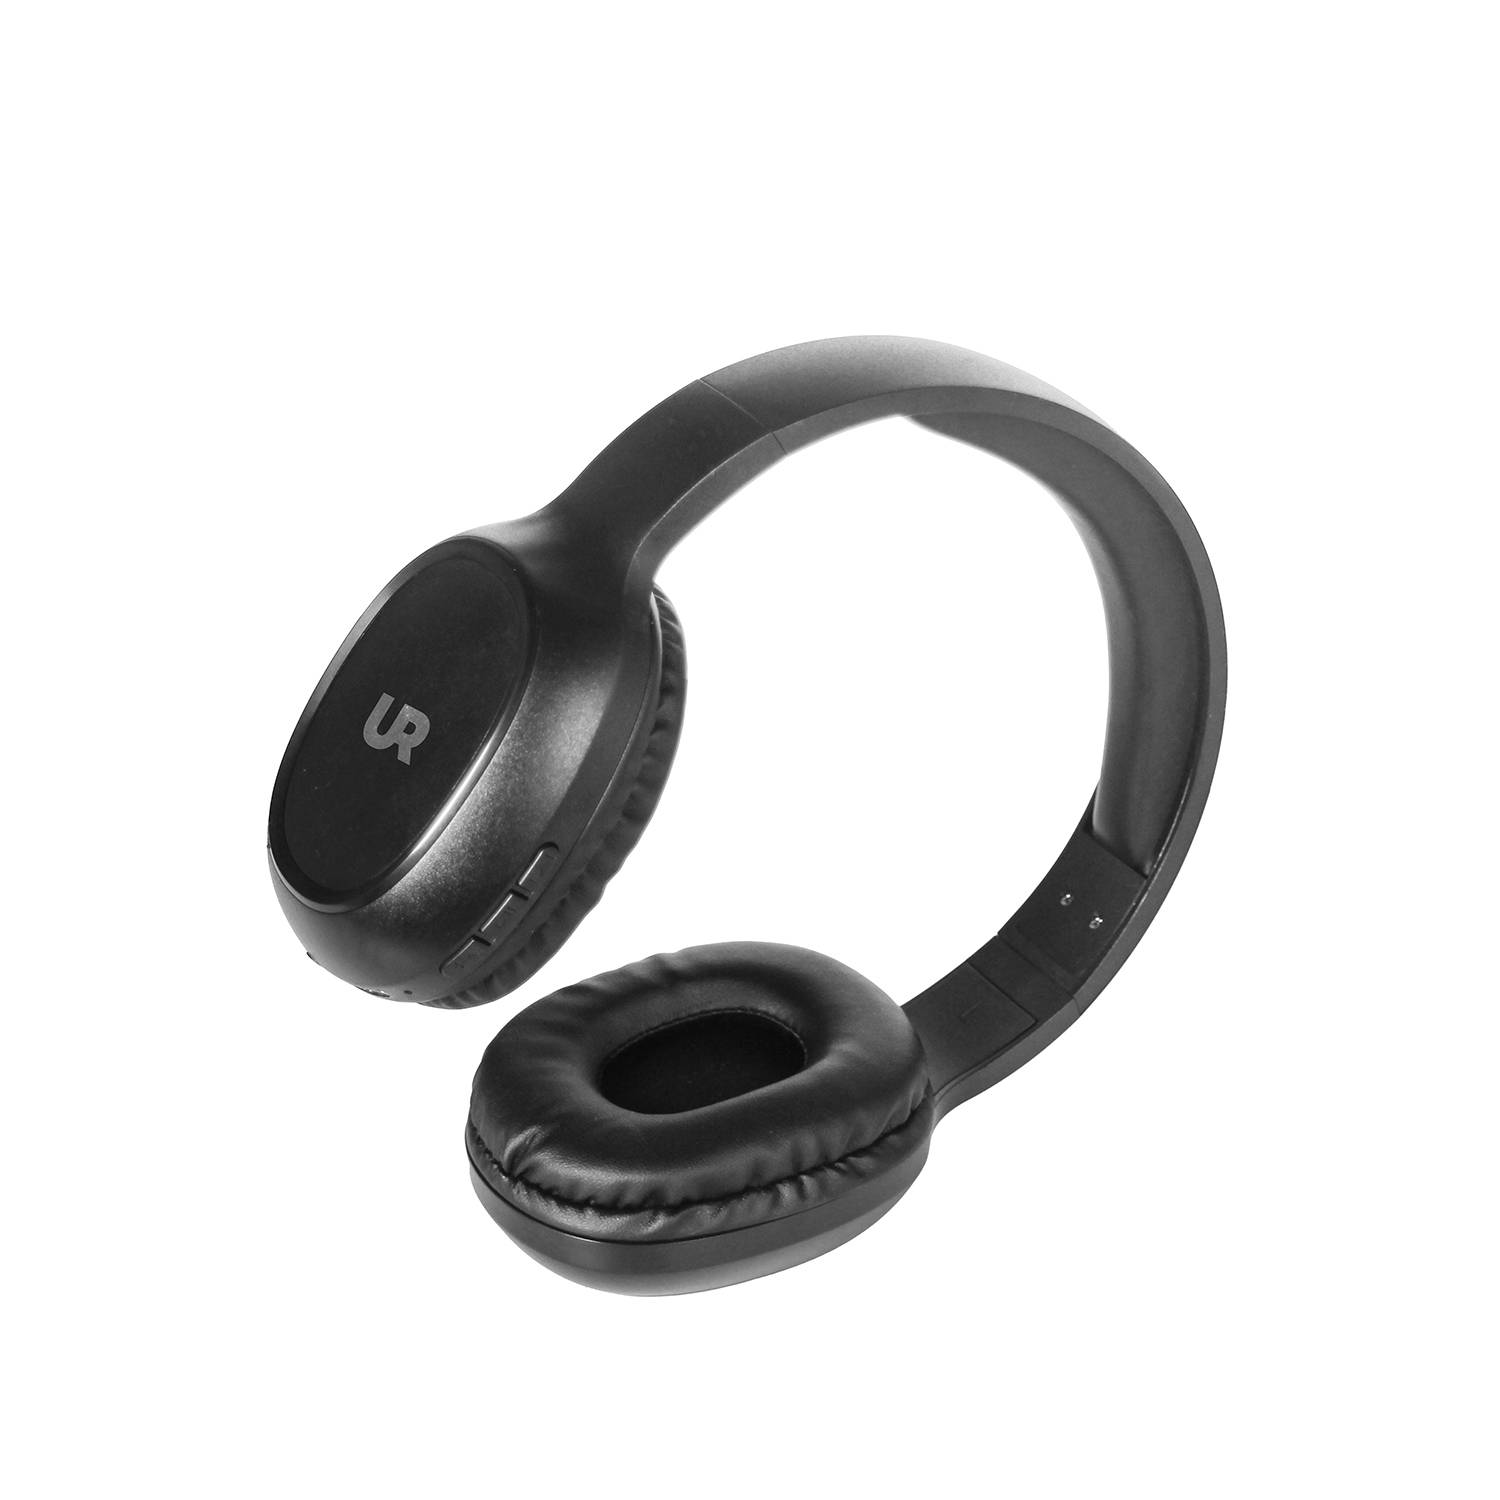 Audifonos Auriculares Cascos Bluetooth Inalambricos Over Ear para